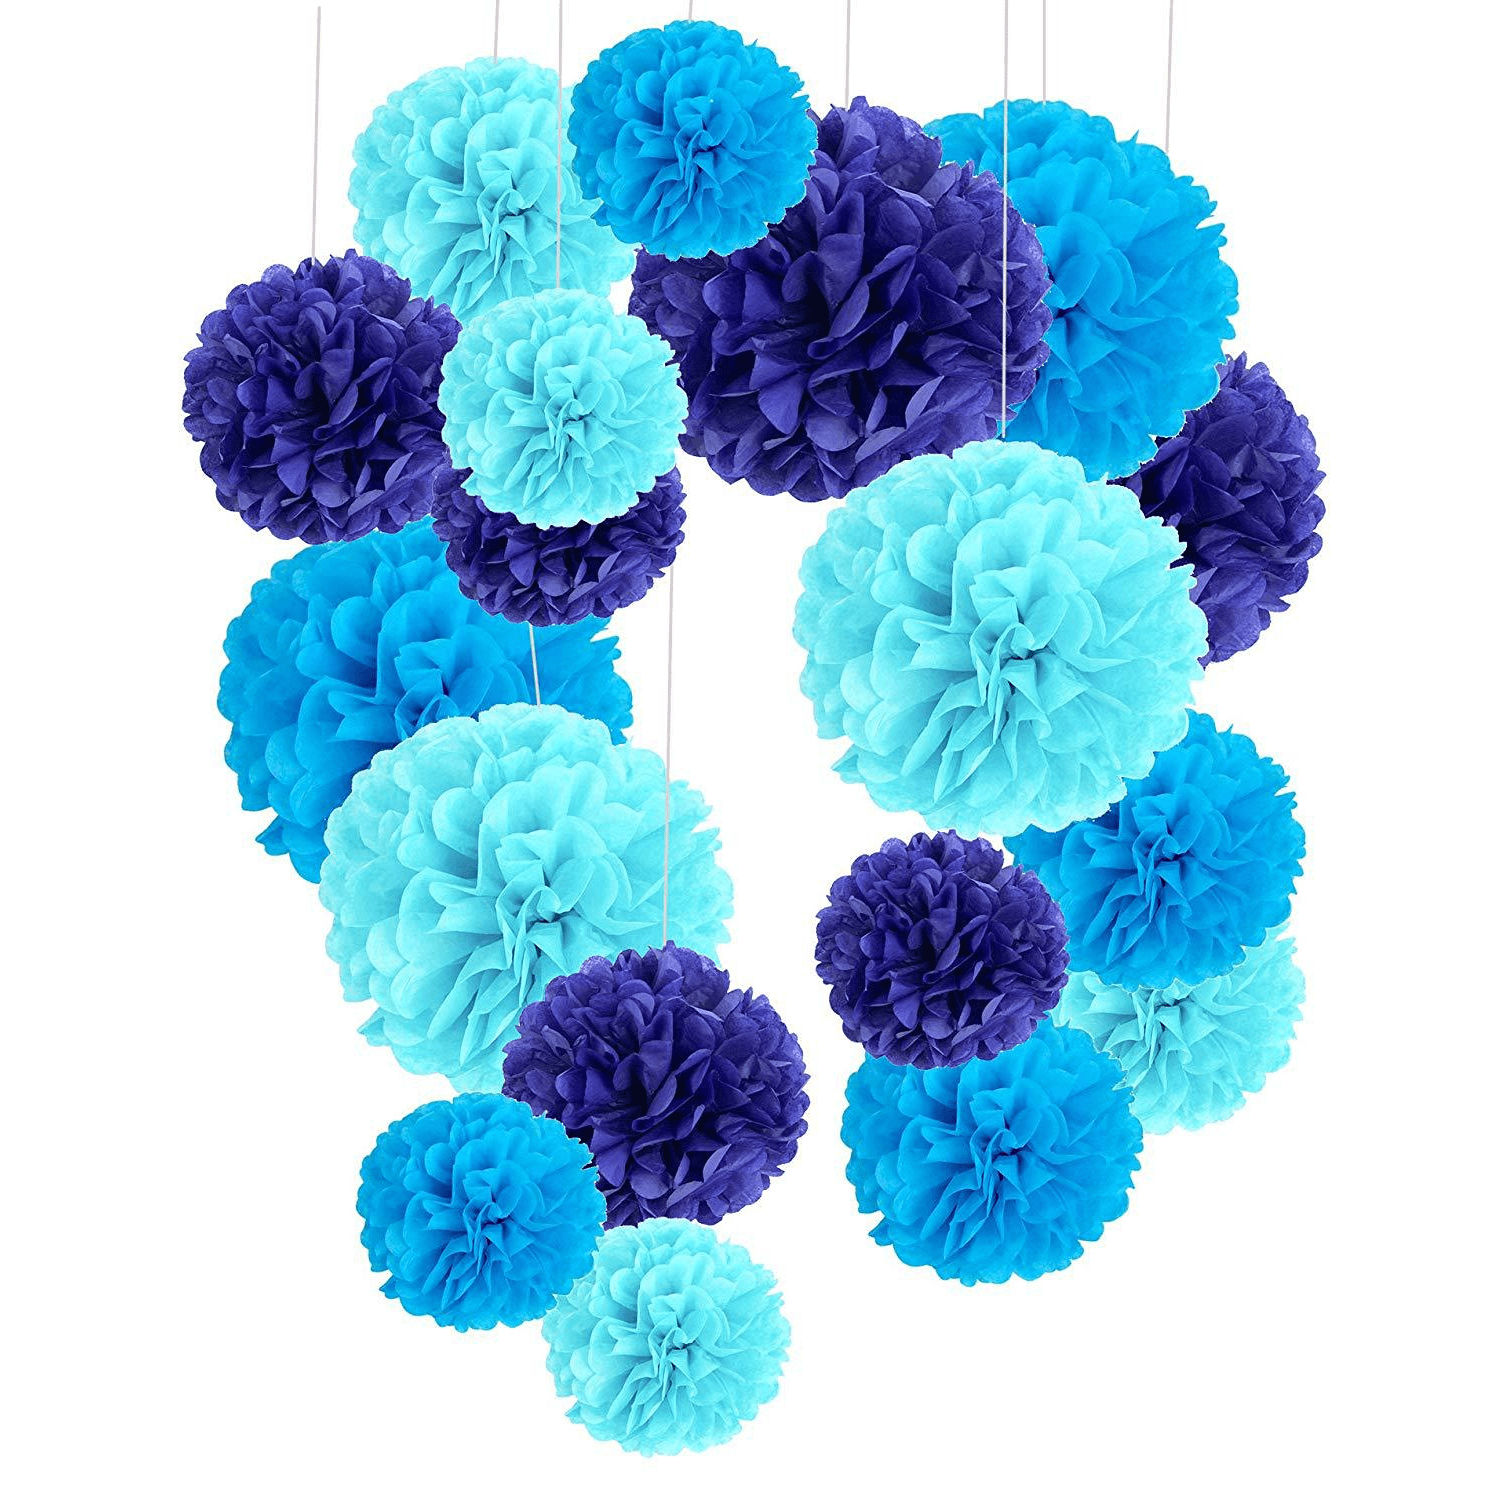 Quasimoon EZ-Fluff 16 inch Arctic Spa Blue Tissue Paper Pom Poms Flowers Balls, Hanging Decorations (4 Pack) by PaperLanternStore